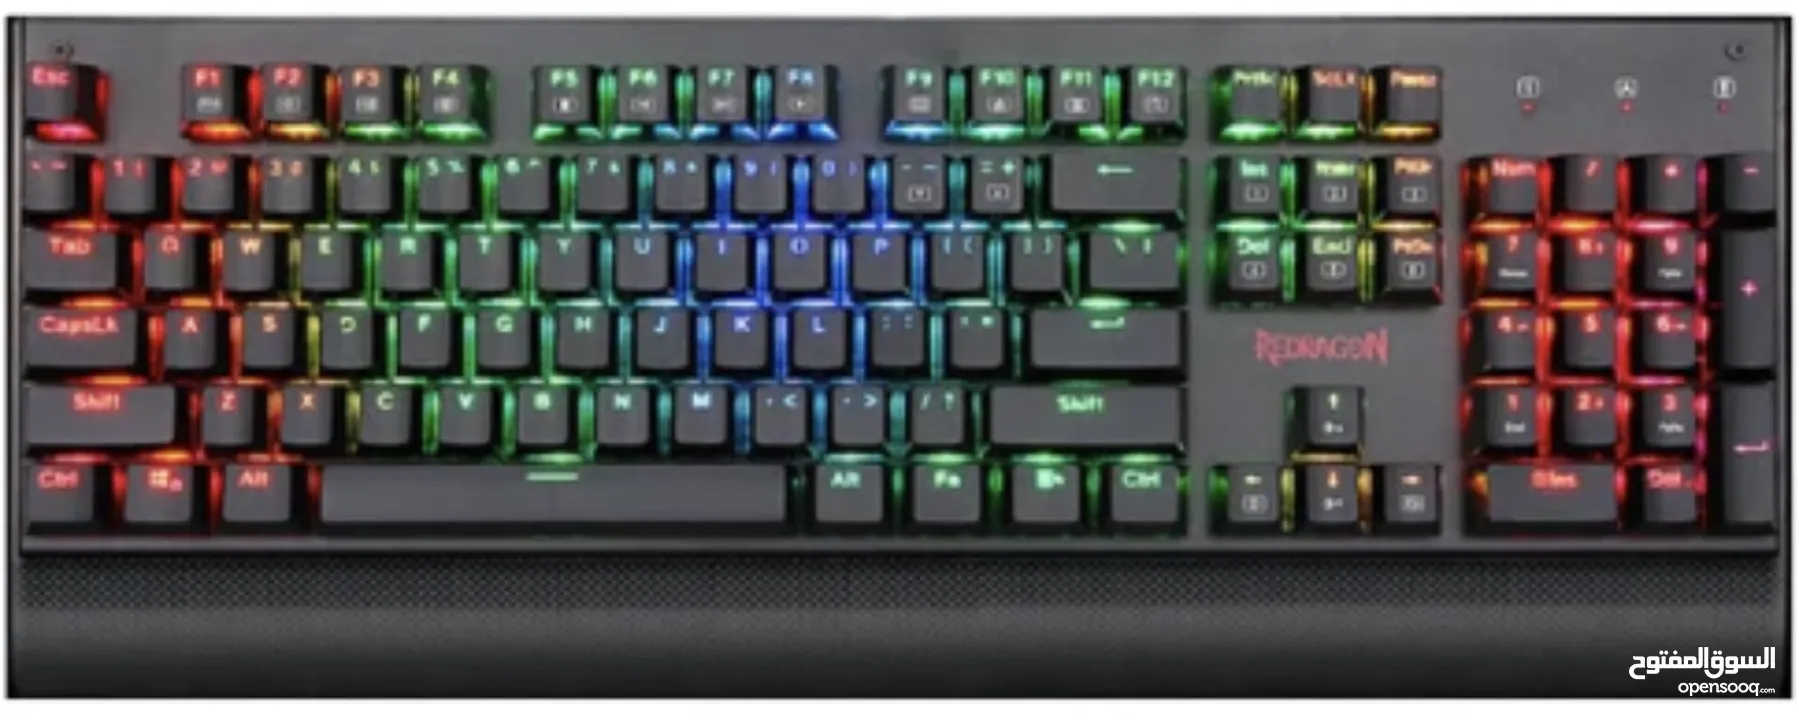 RedDragon keyboard (KaLa)